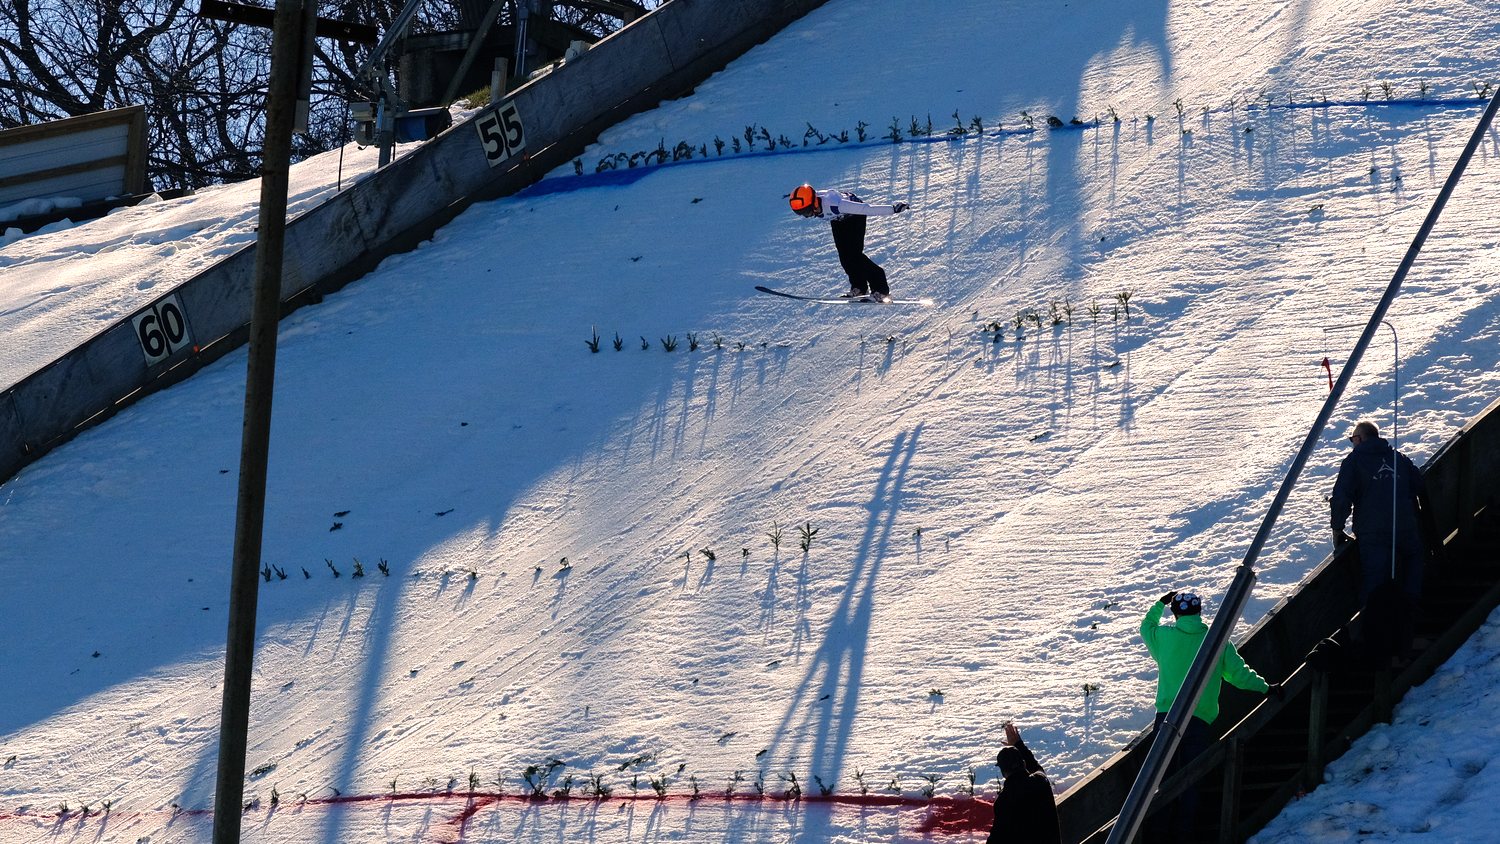 Ski jumper at the 118th Annual Norge Ski Club Winter Tournament.